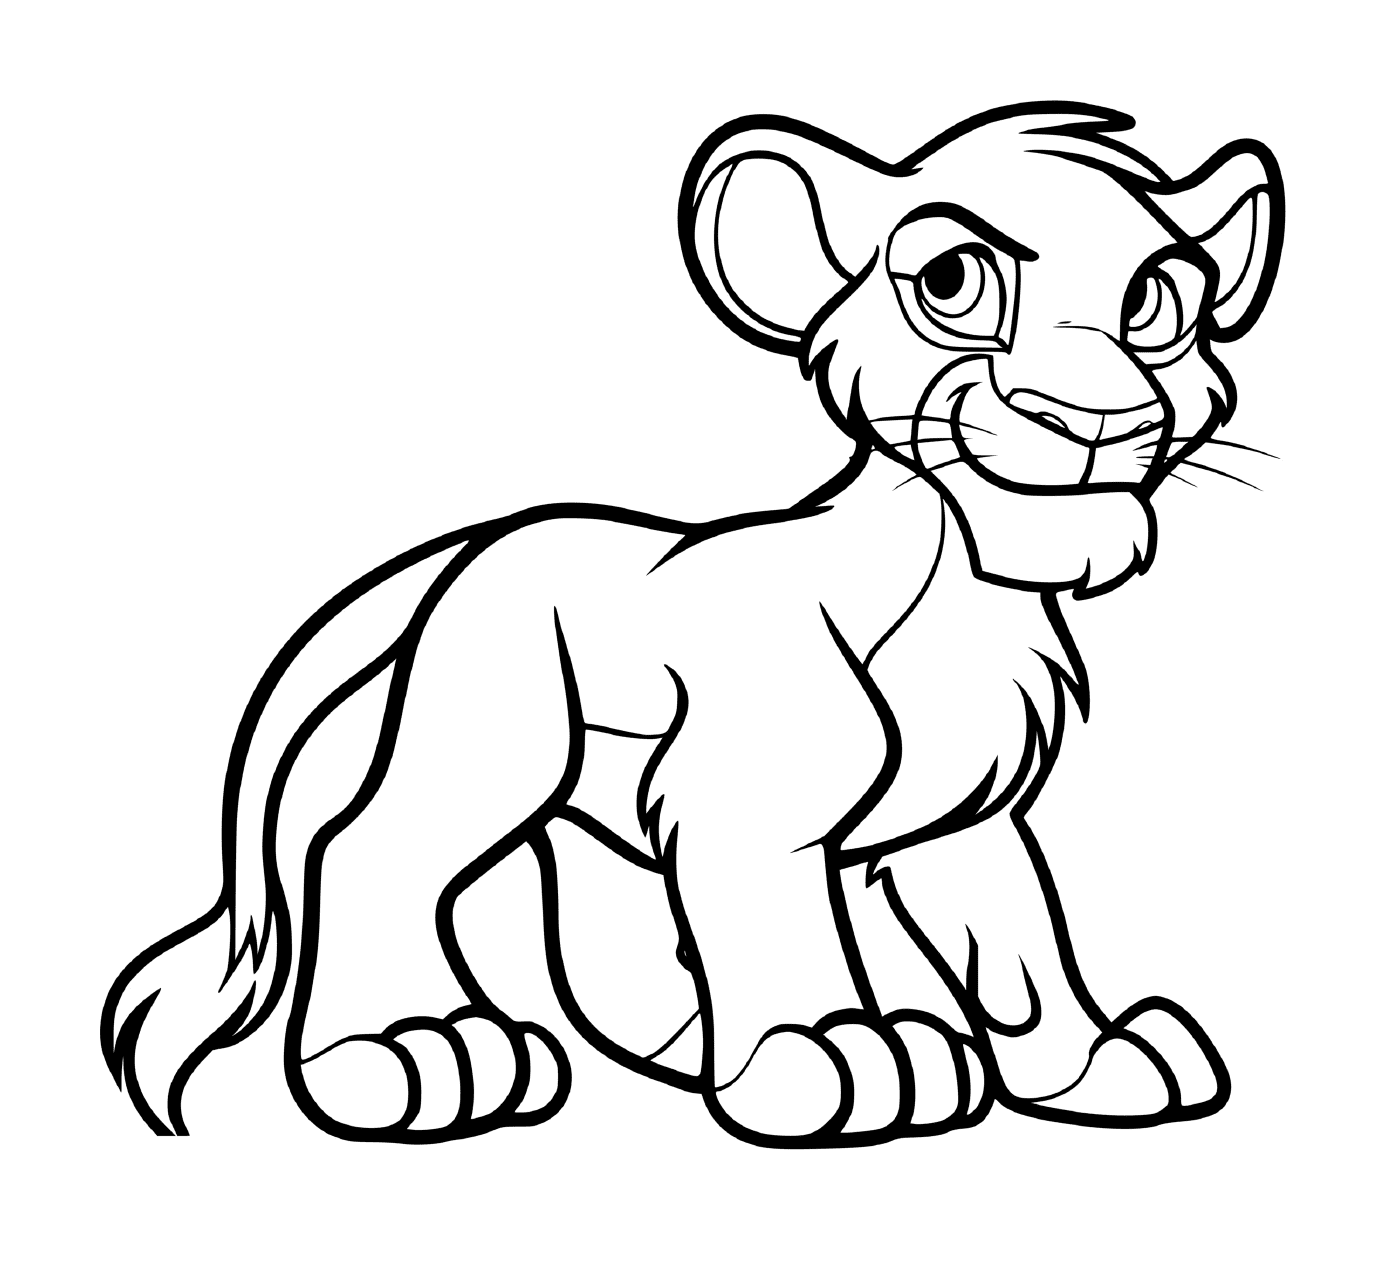  Simba, brave lion 